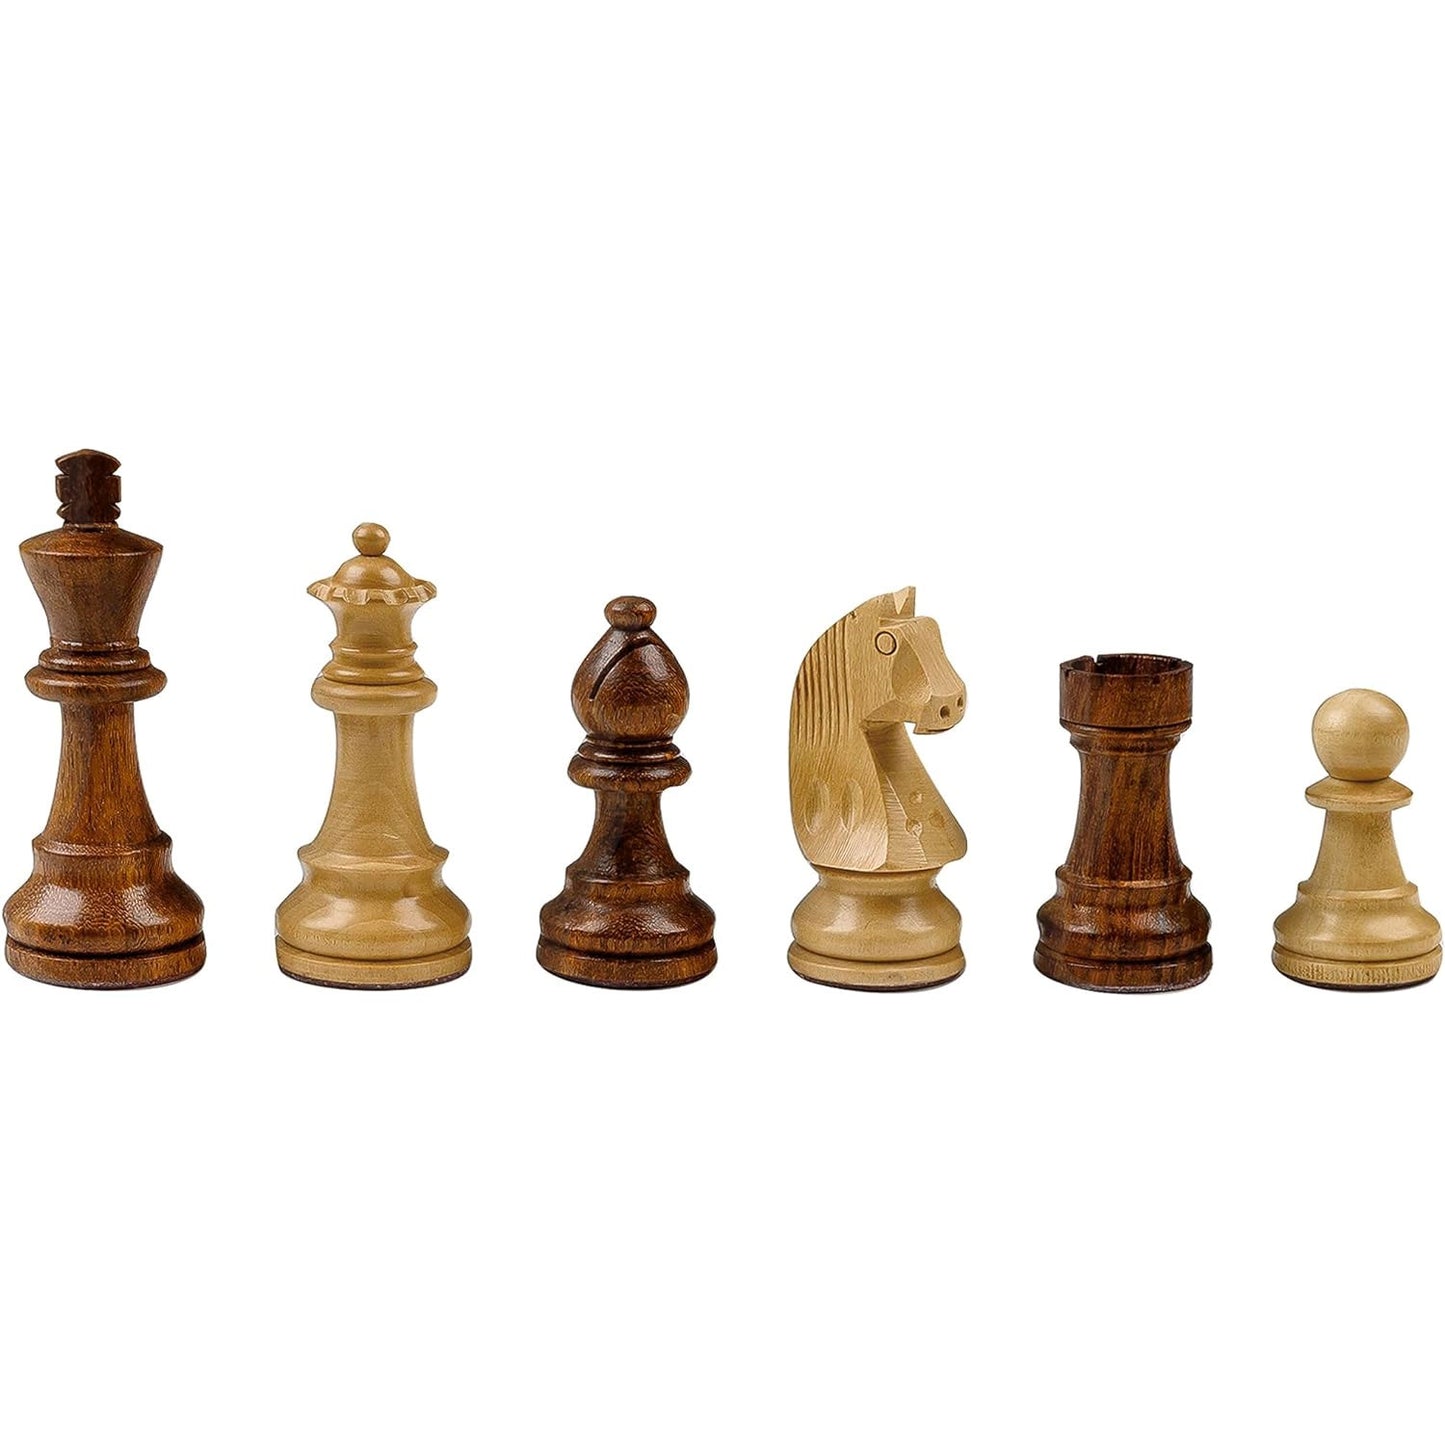 Philos chess set, maple, exclusive!